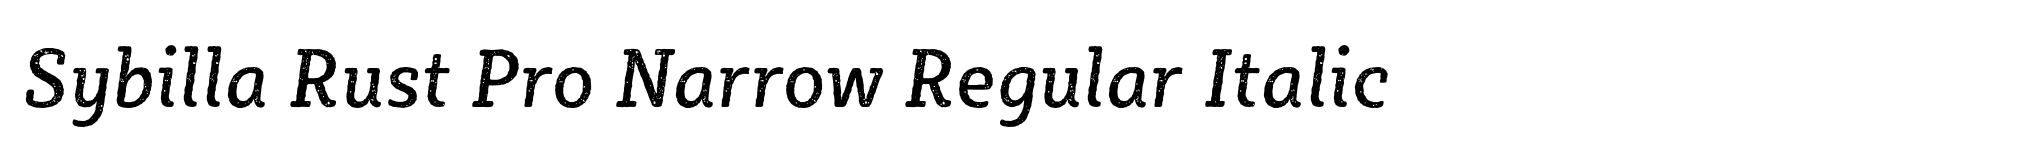 Sybilla Rust Pro Narrow Regular Italic image